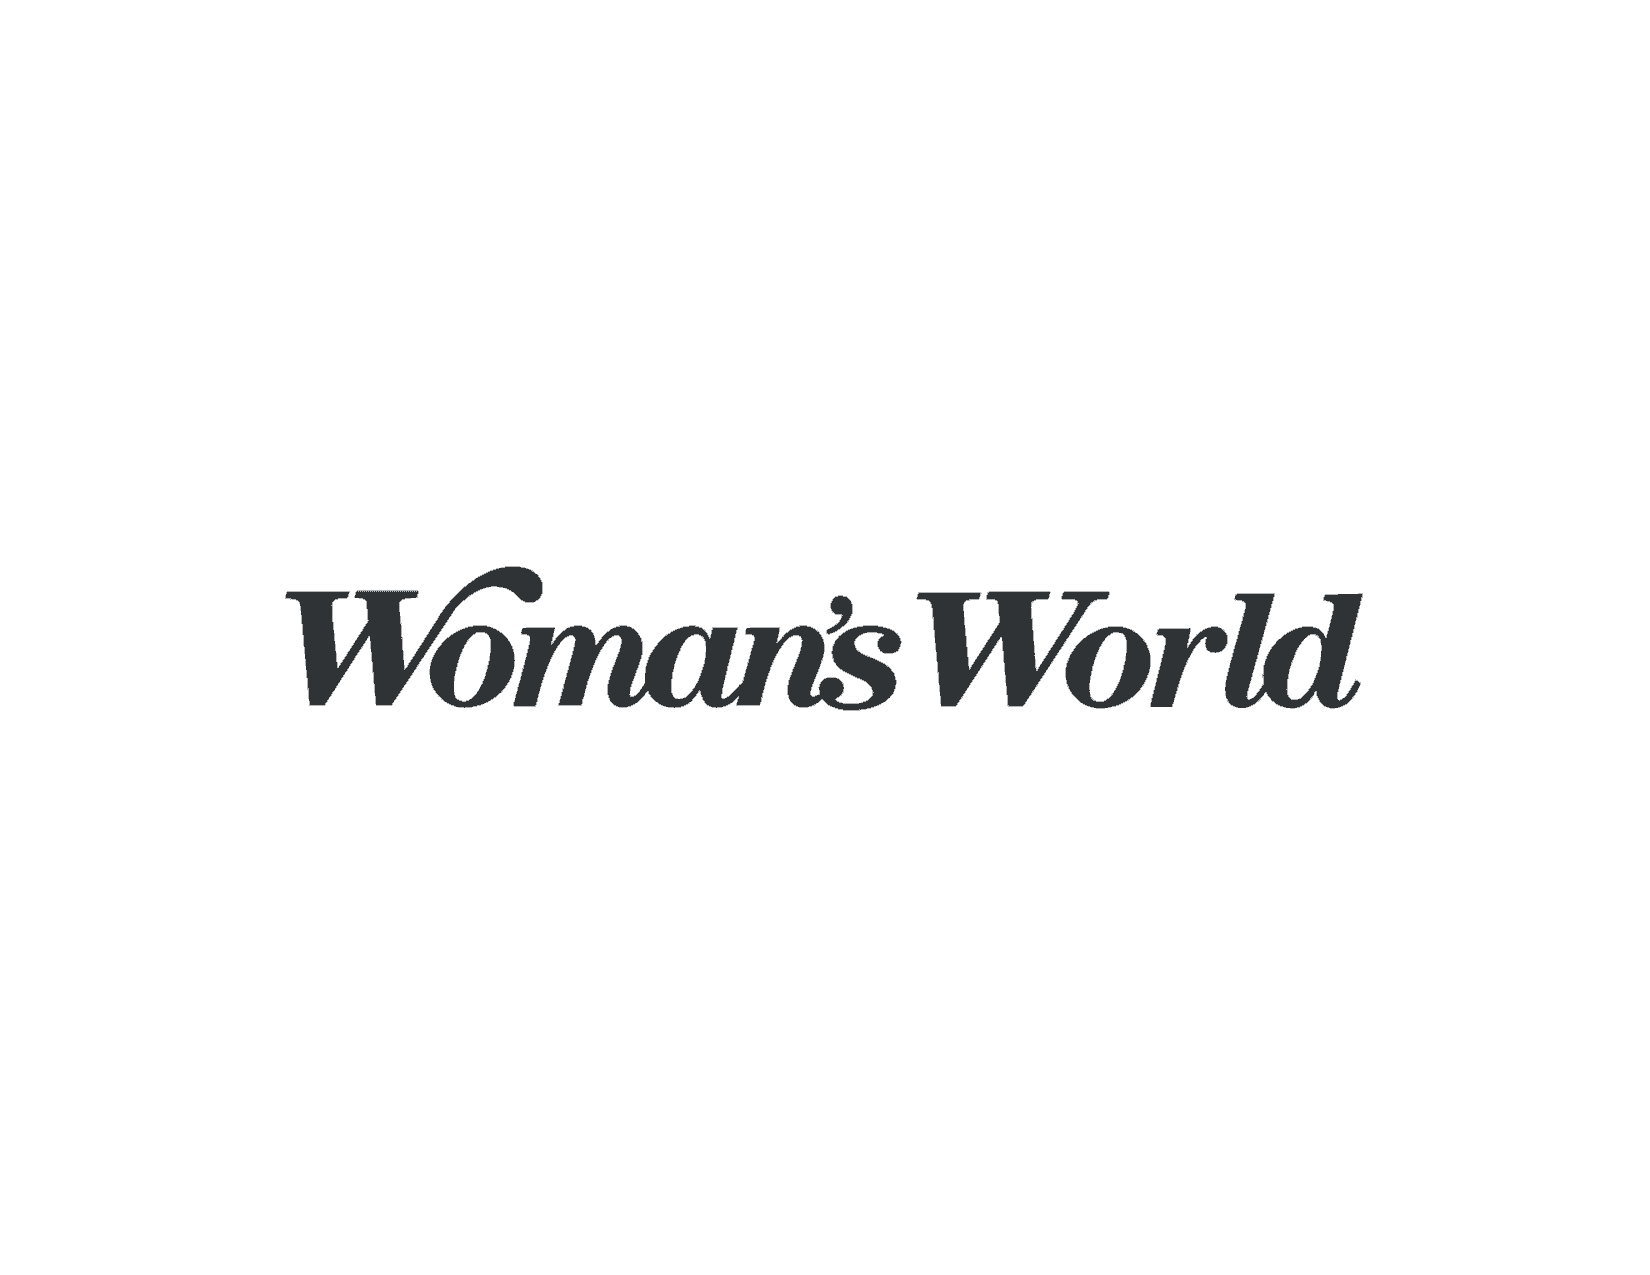 Womans world logo